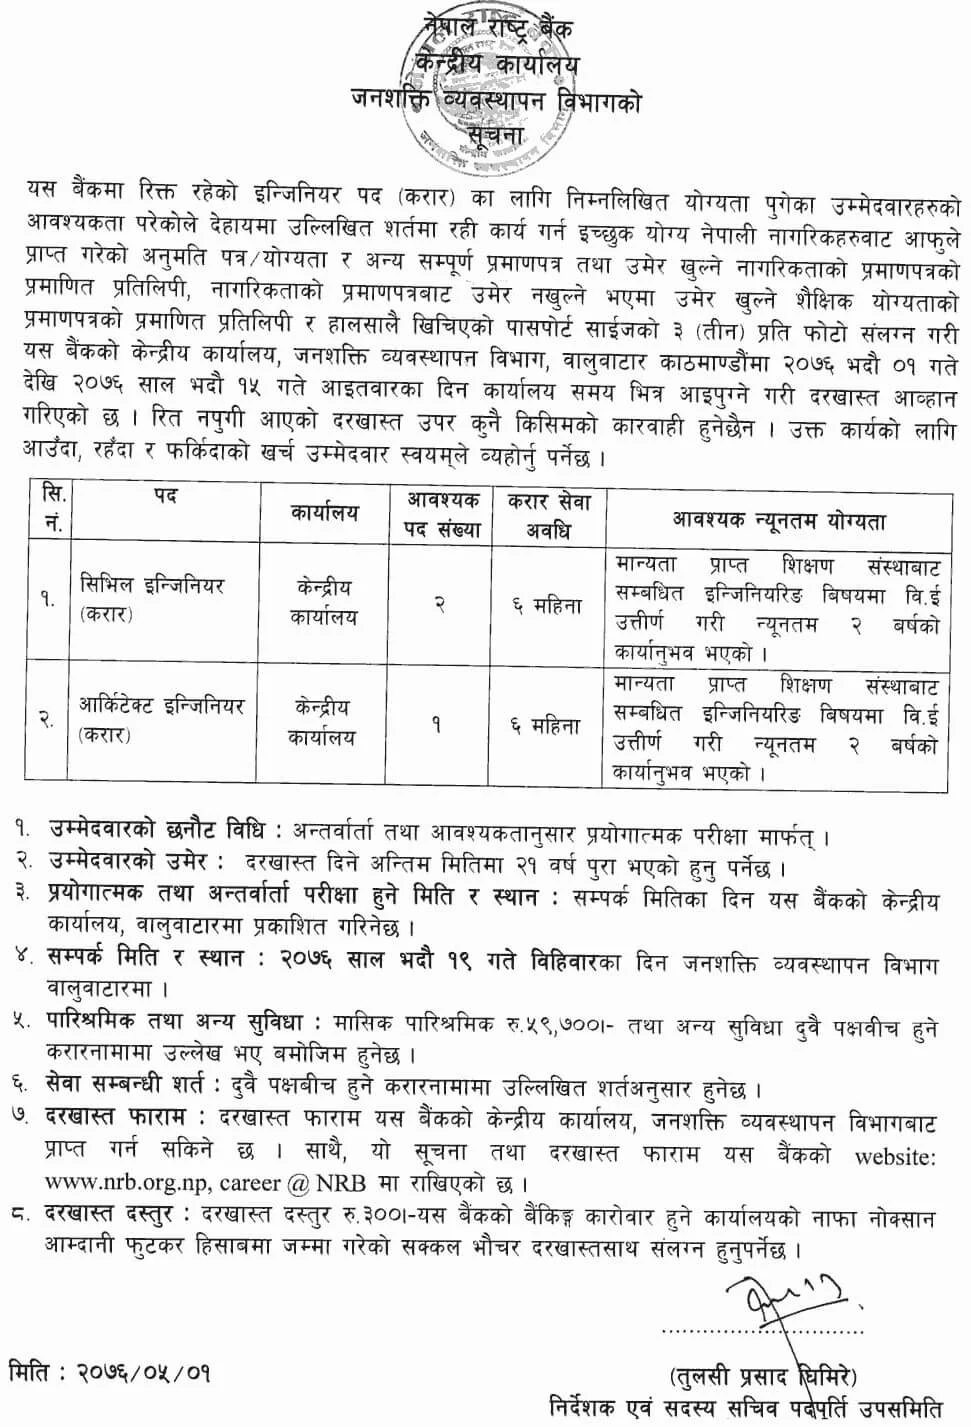 Nepal Rastra Bank Jobs for Engineers